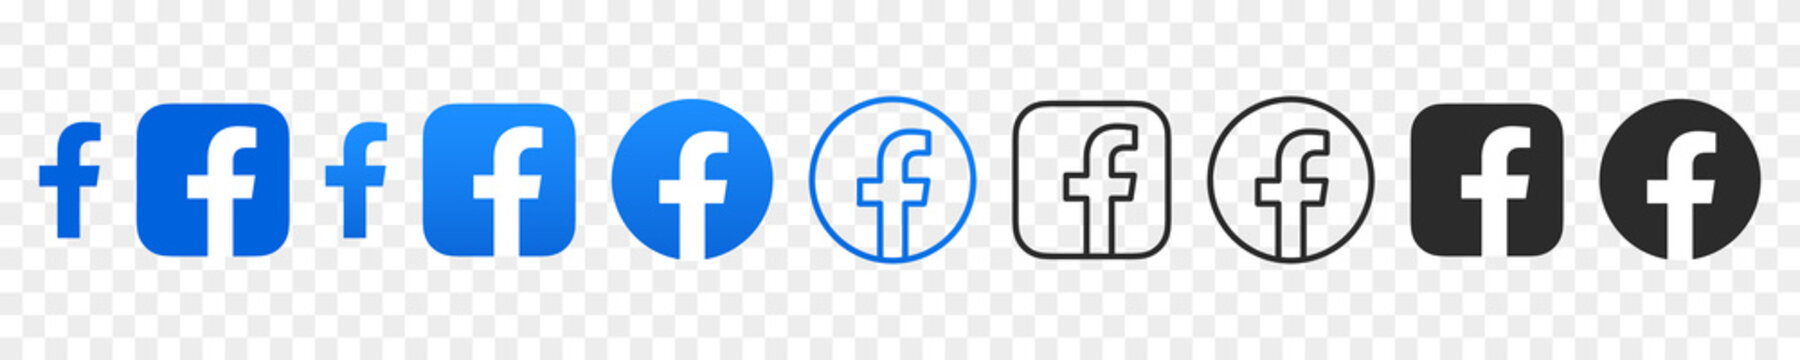 Facebook logo on isolated on transparent background icon set ...